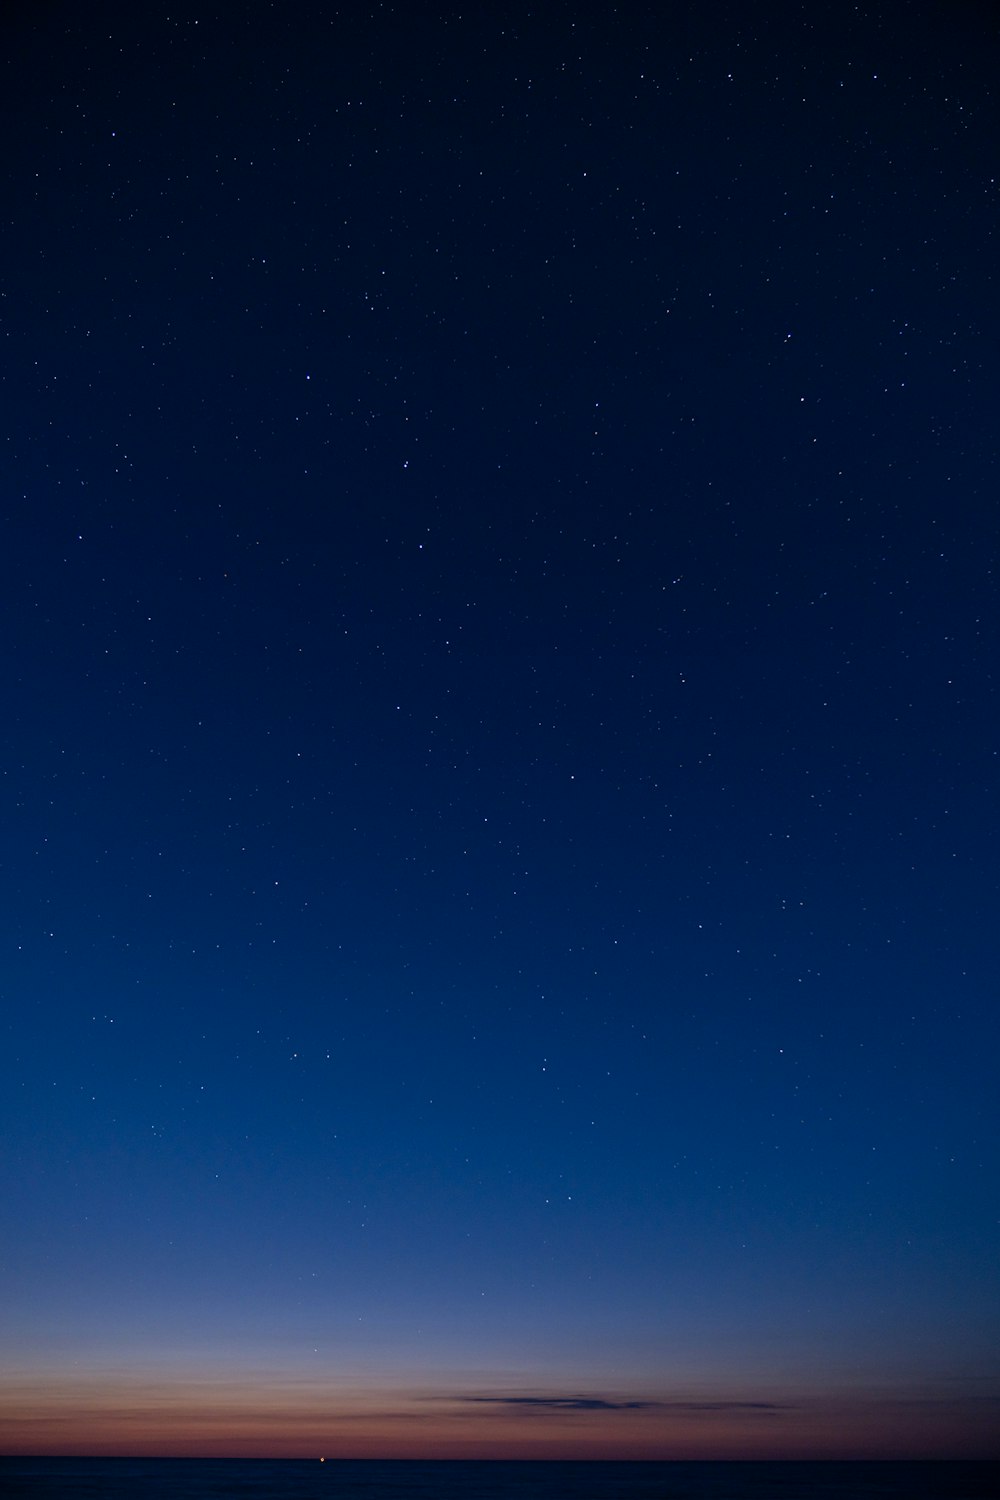 a starry night sky over a flat plain